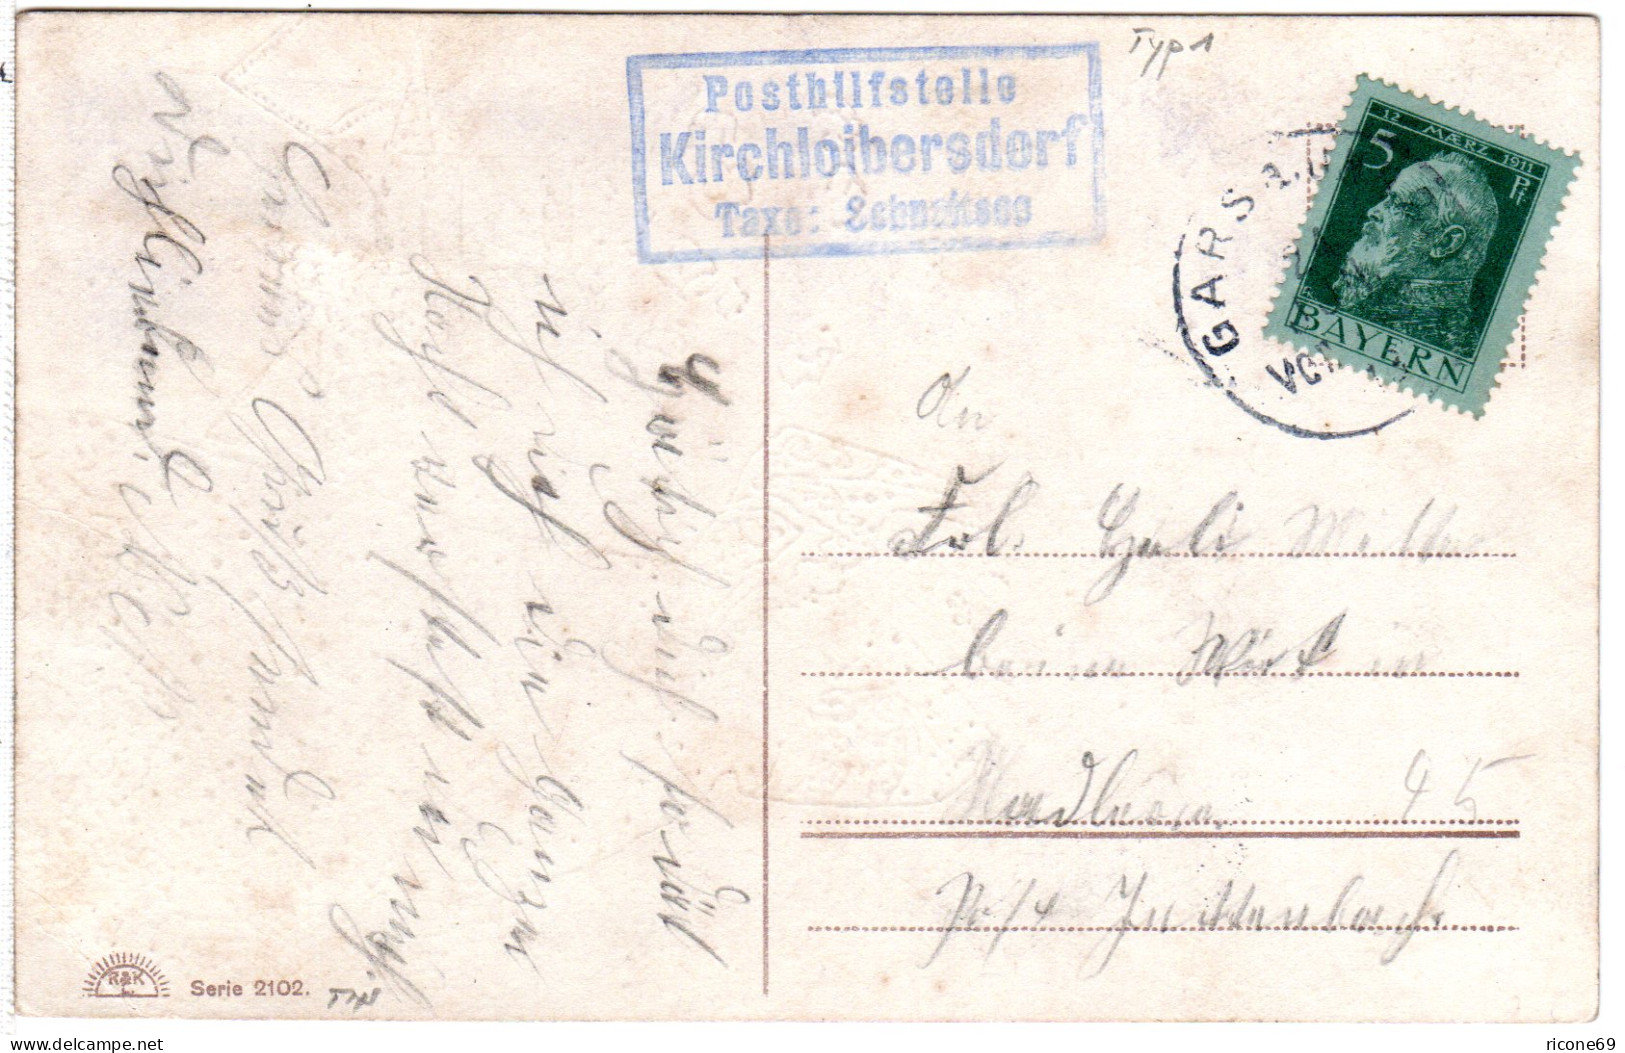 Bayern 1913, Posthilfstelle KIRCHLOIBERSDORF Taxe Schnaitsee Auf Karte M. 5 Pf. - Brieven En Documenten